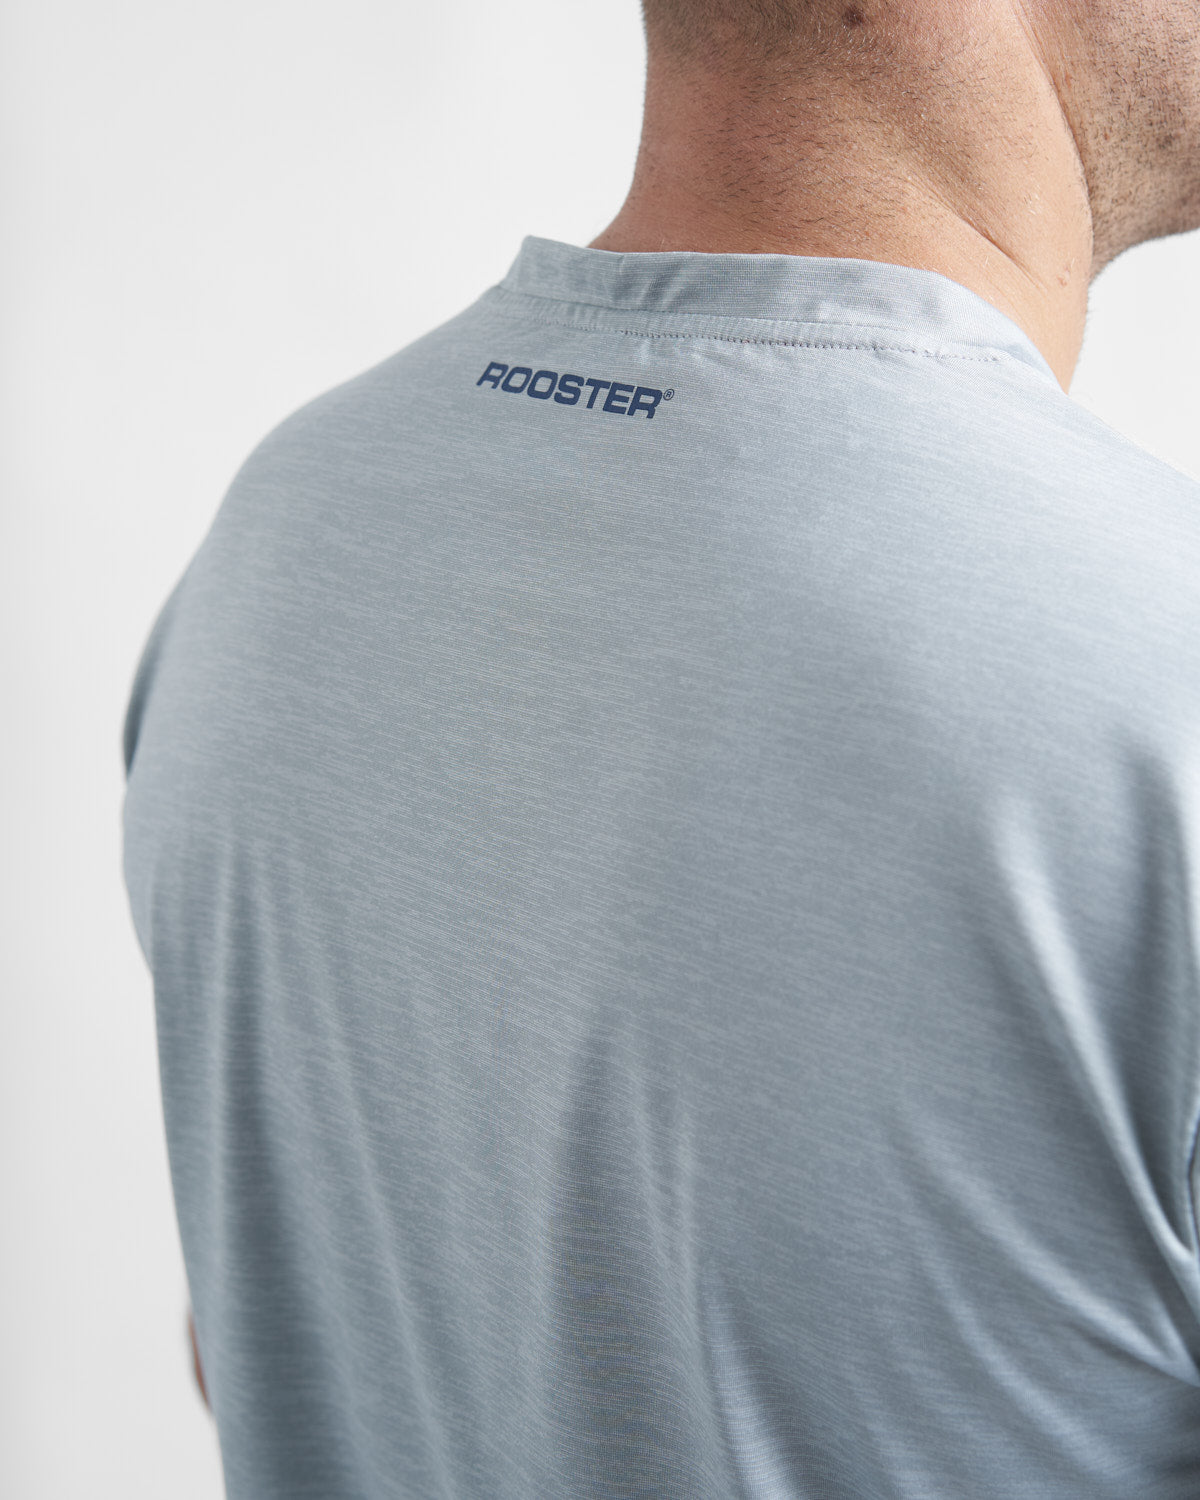 Rooster T-Shirt - Light Grey